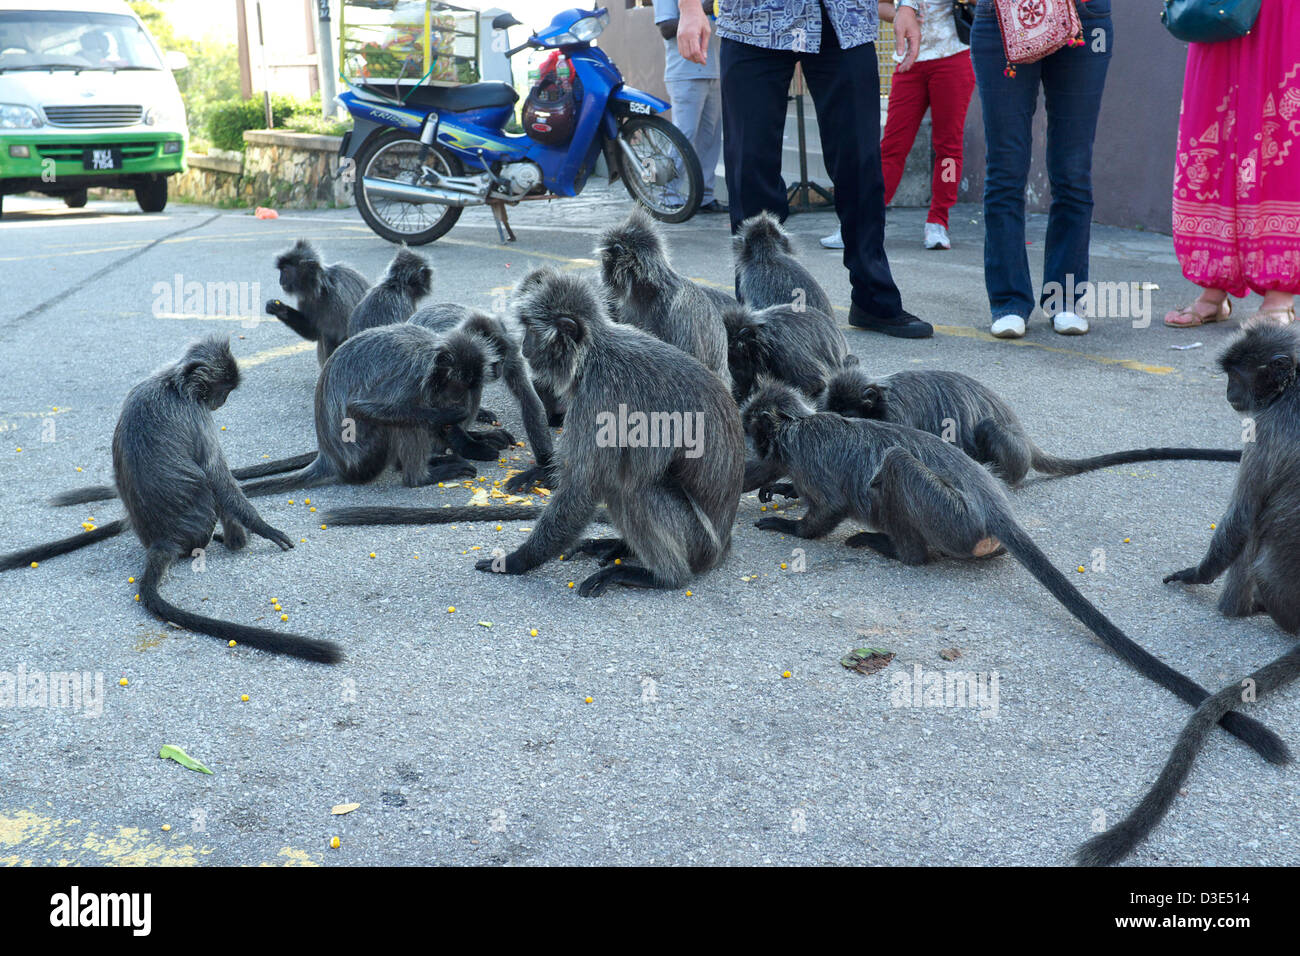 Monkeys eating food provided by visitors, Bukit Melawati in Kuala Selangor, Malaysia Stock Photo